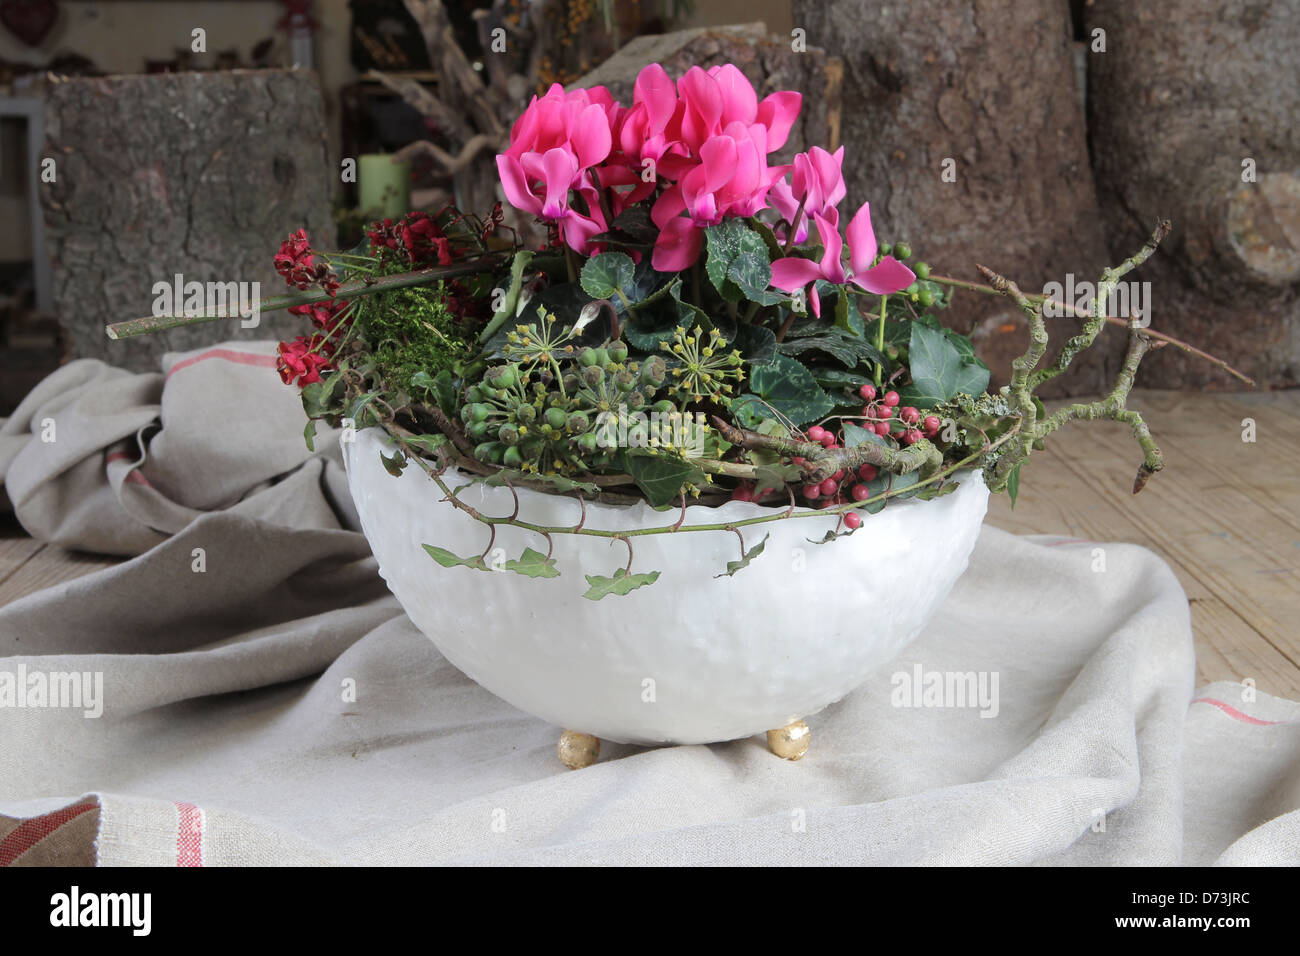 Harrislee Germany With Cyclamen Flower Arrangement In A Dish Stock Photo Alamy